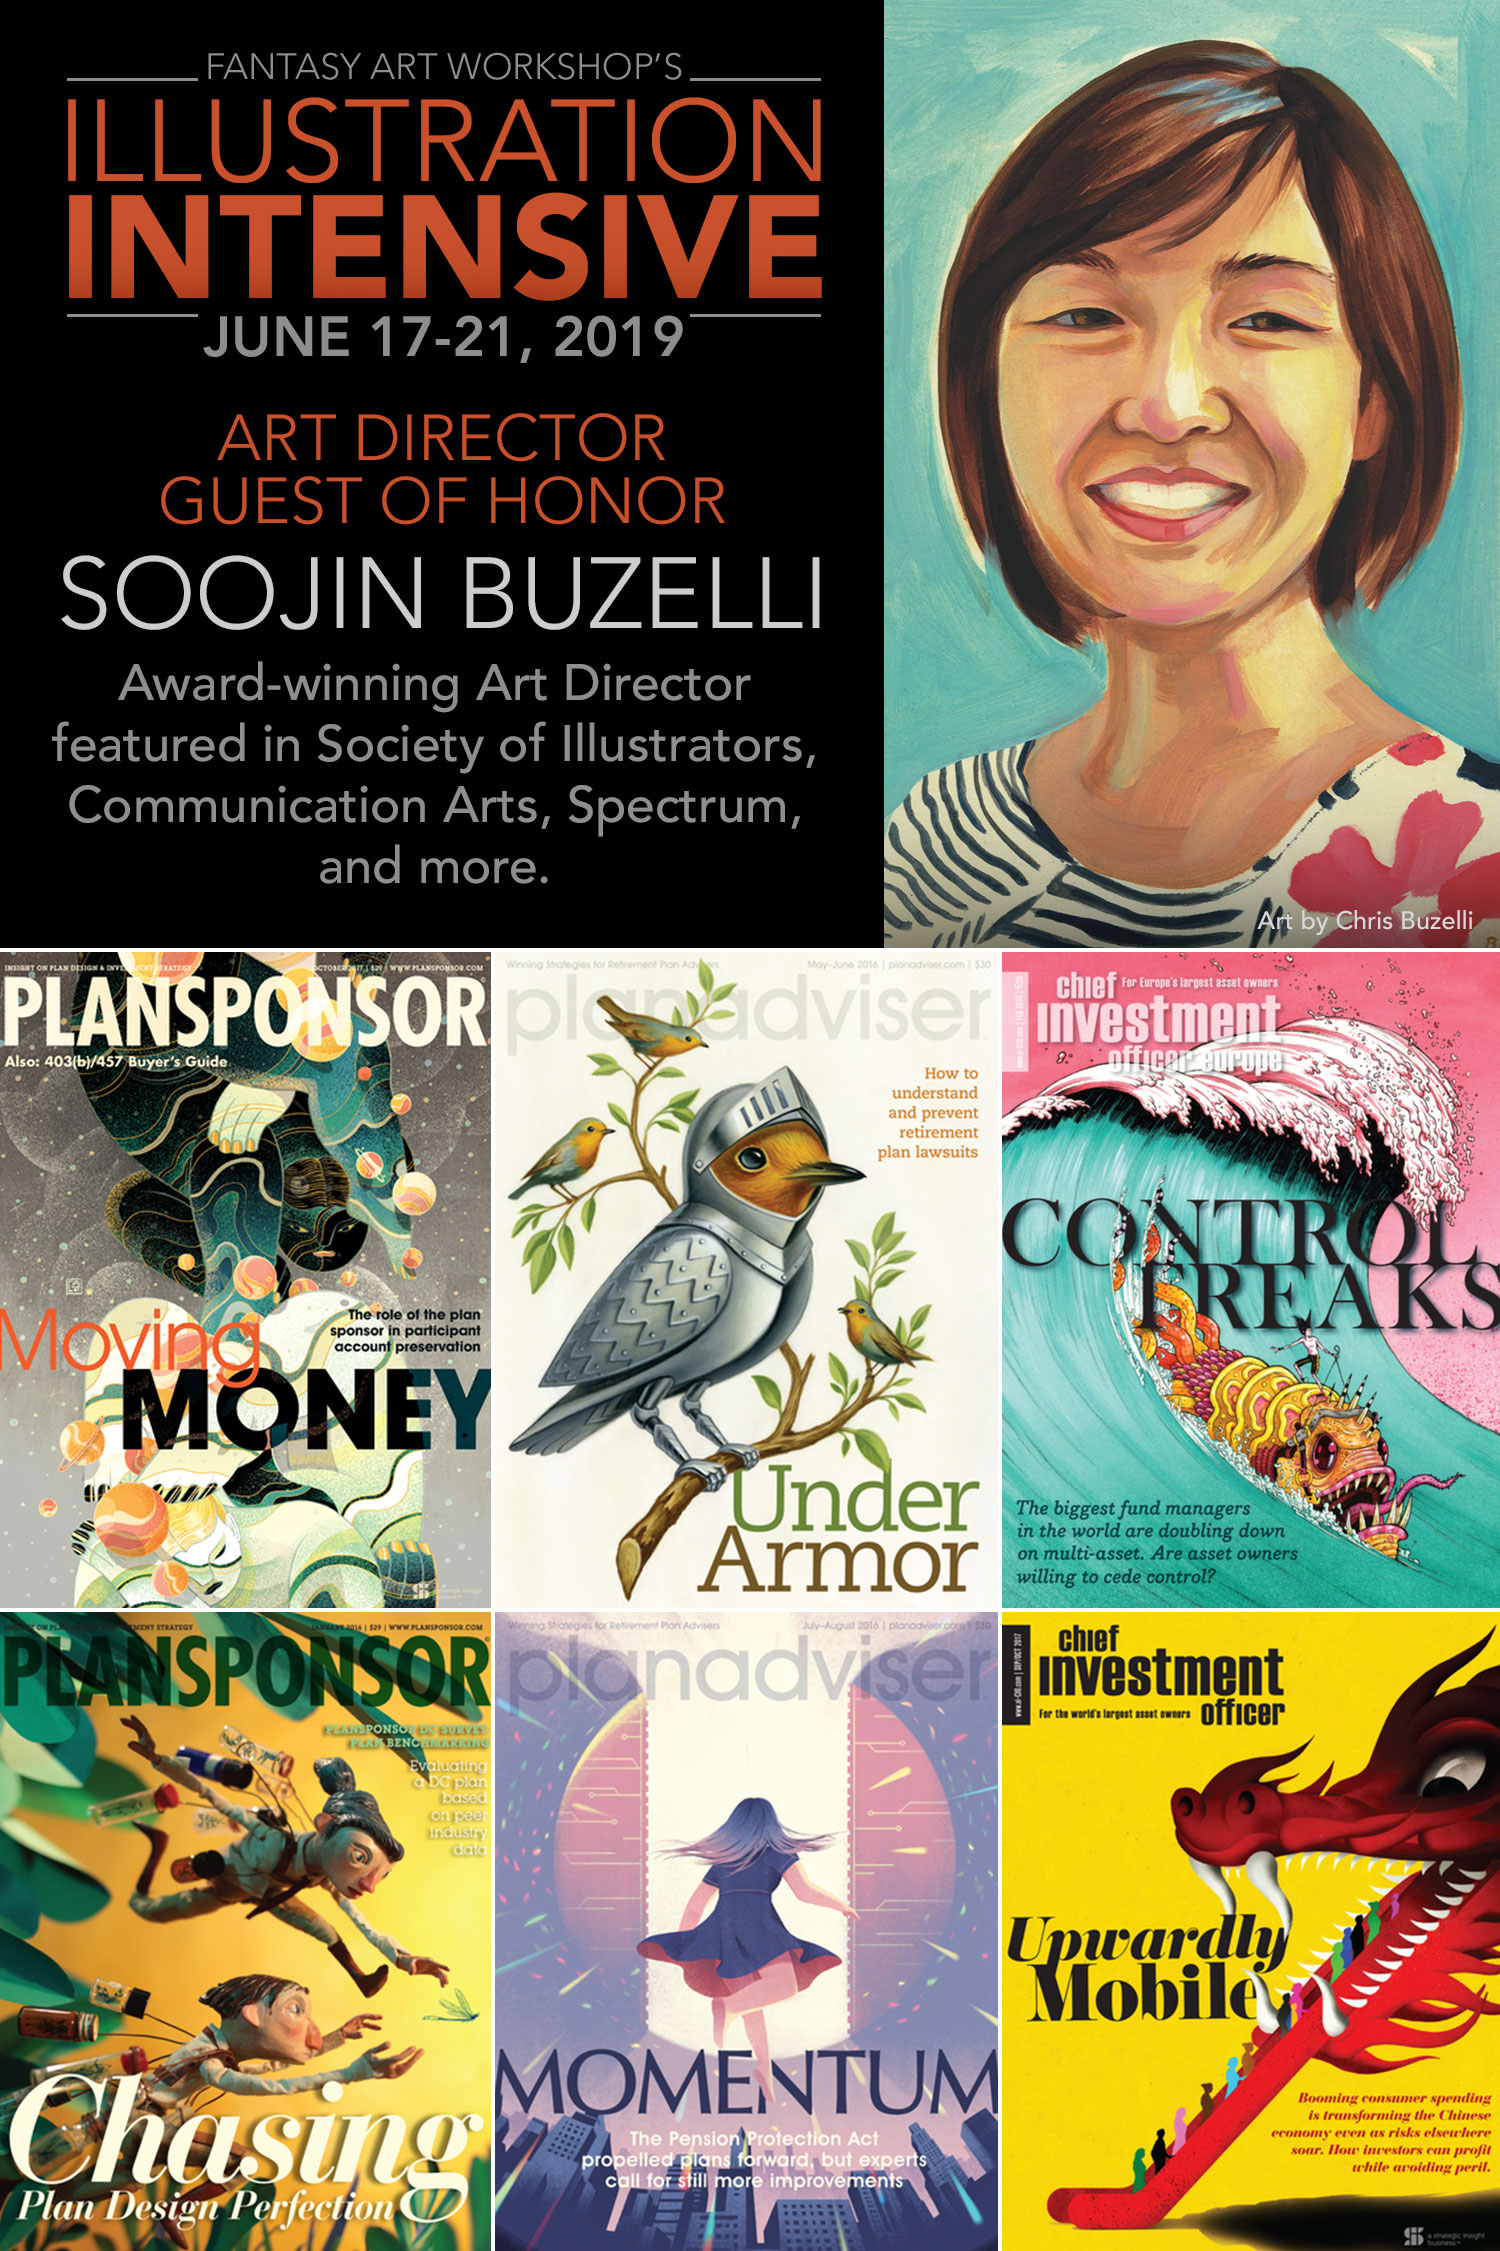 SooJin Buzelli - Art Director Guest of Honor